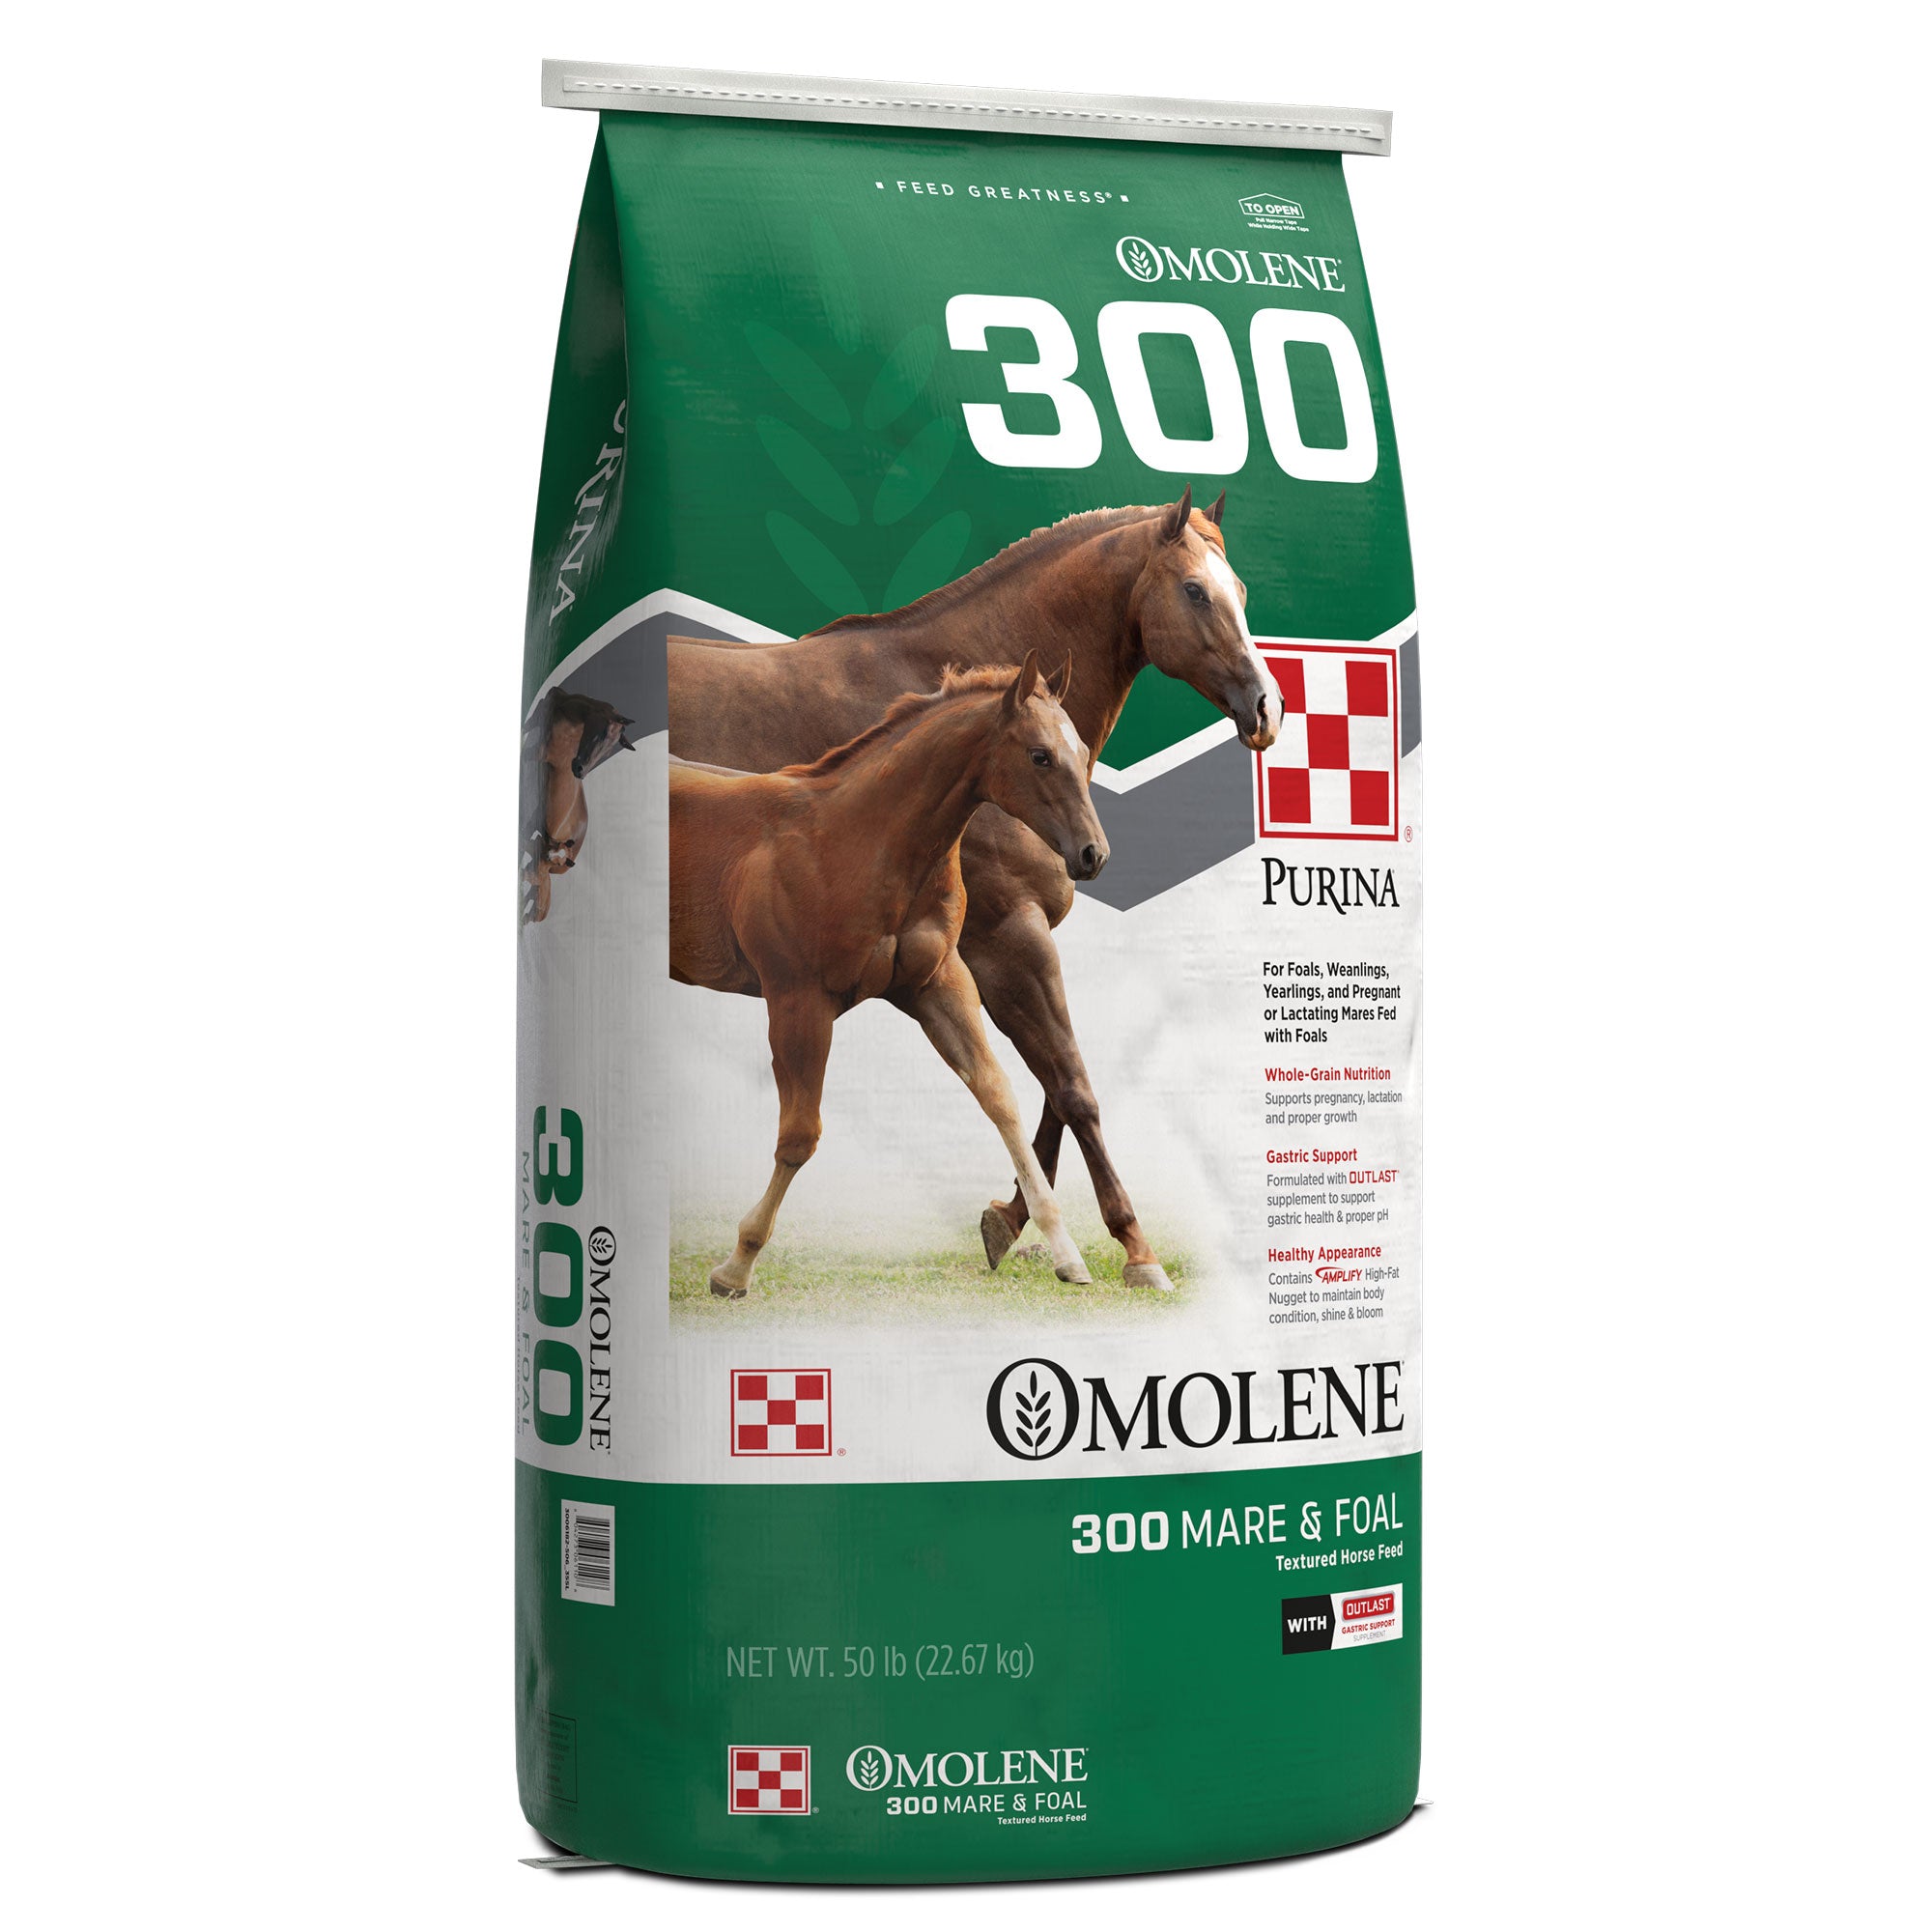 Purina® Omolene® #300 Growth Horse Feed